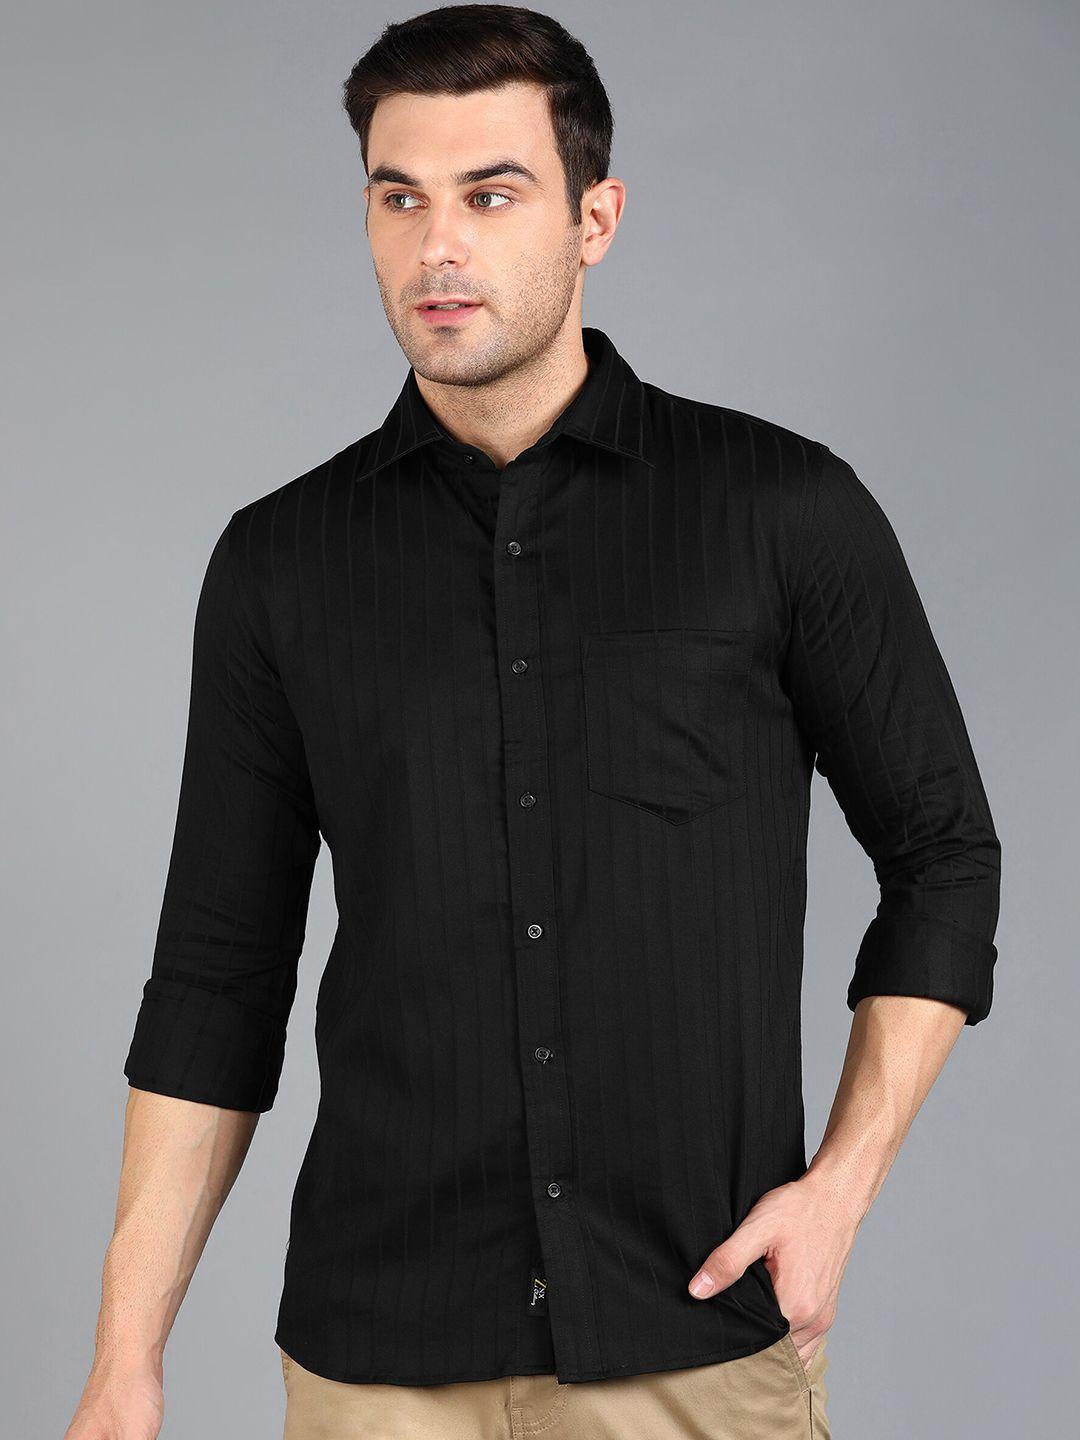 znx clothing men black premium slim fit opaque checked formal shirt